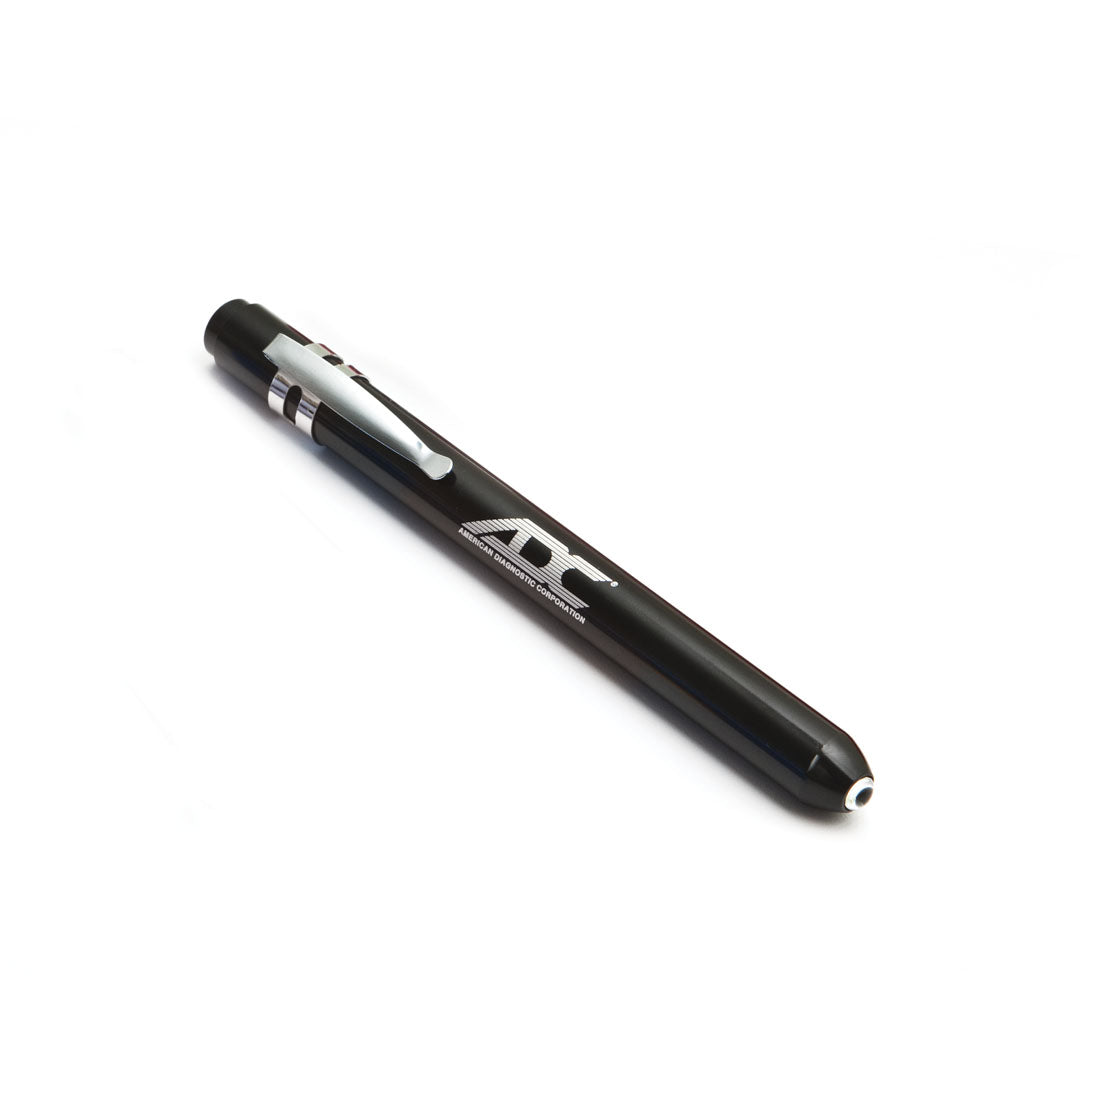 METALITE Reusable Pupil Gauge Penlight Pen Light ADC Black  